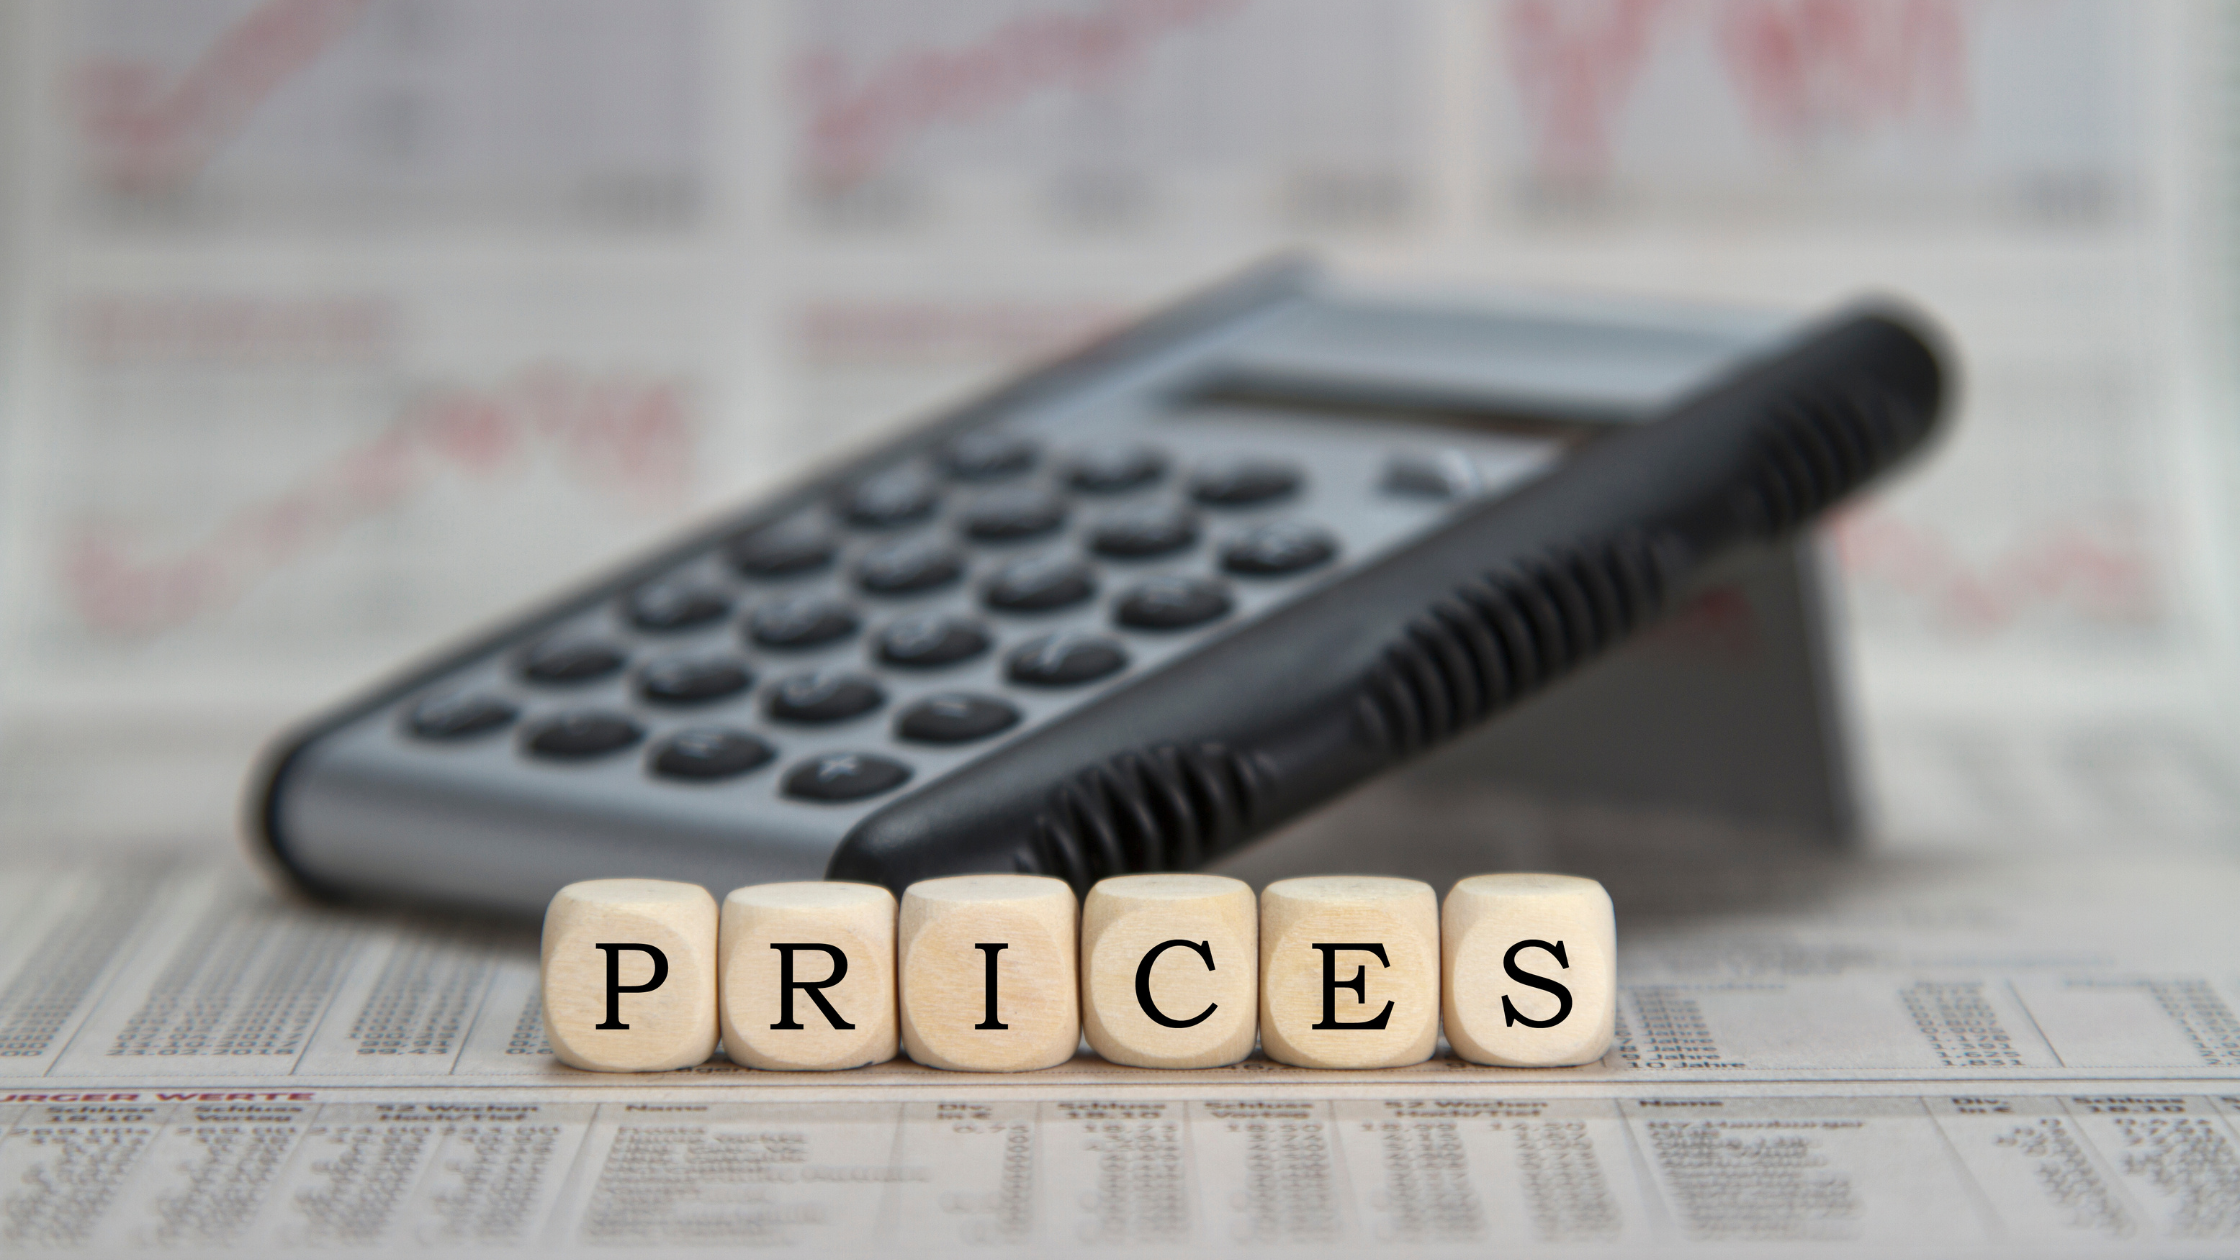 Variable Pricing Models